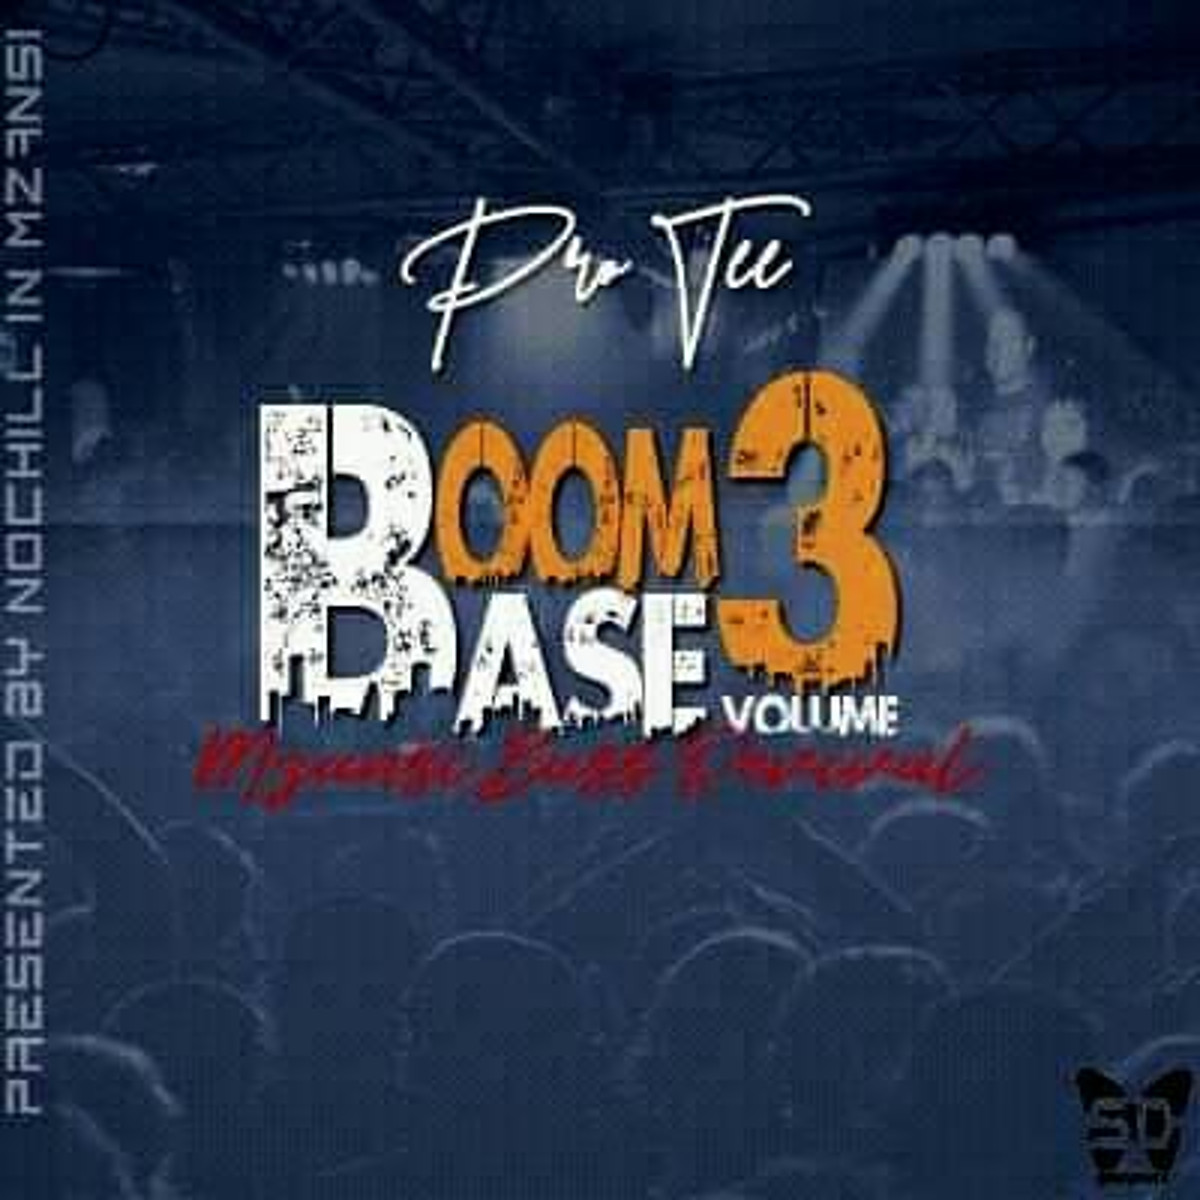 Pro-Tee - Boom-Base, Vol. 3, new gqom music, gqom 219, gqom songs, latest gqom music, gqom house music download, durban gqom, sa gqom, south african gqom muusic, gqom mp3 download